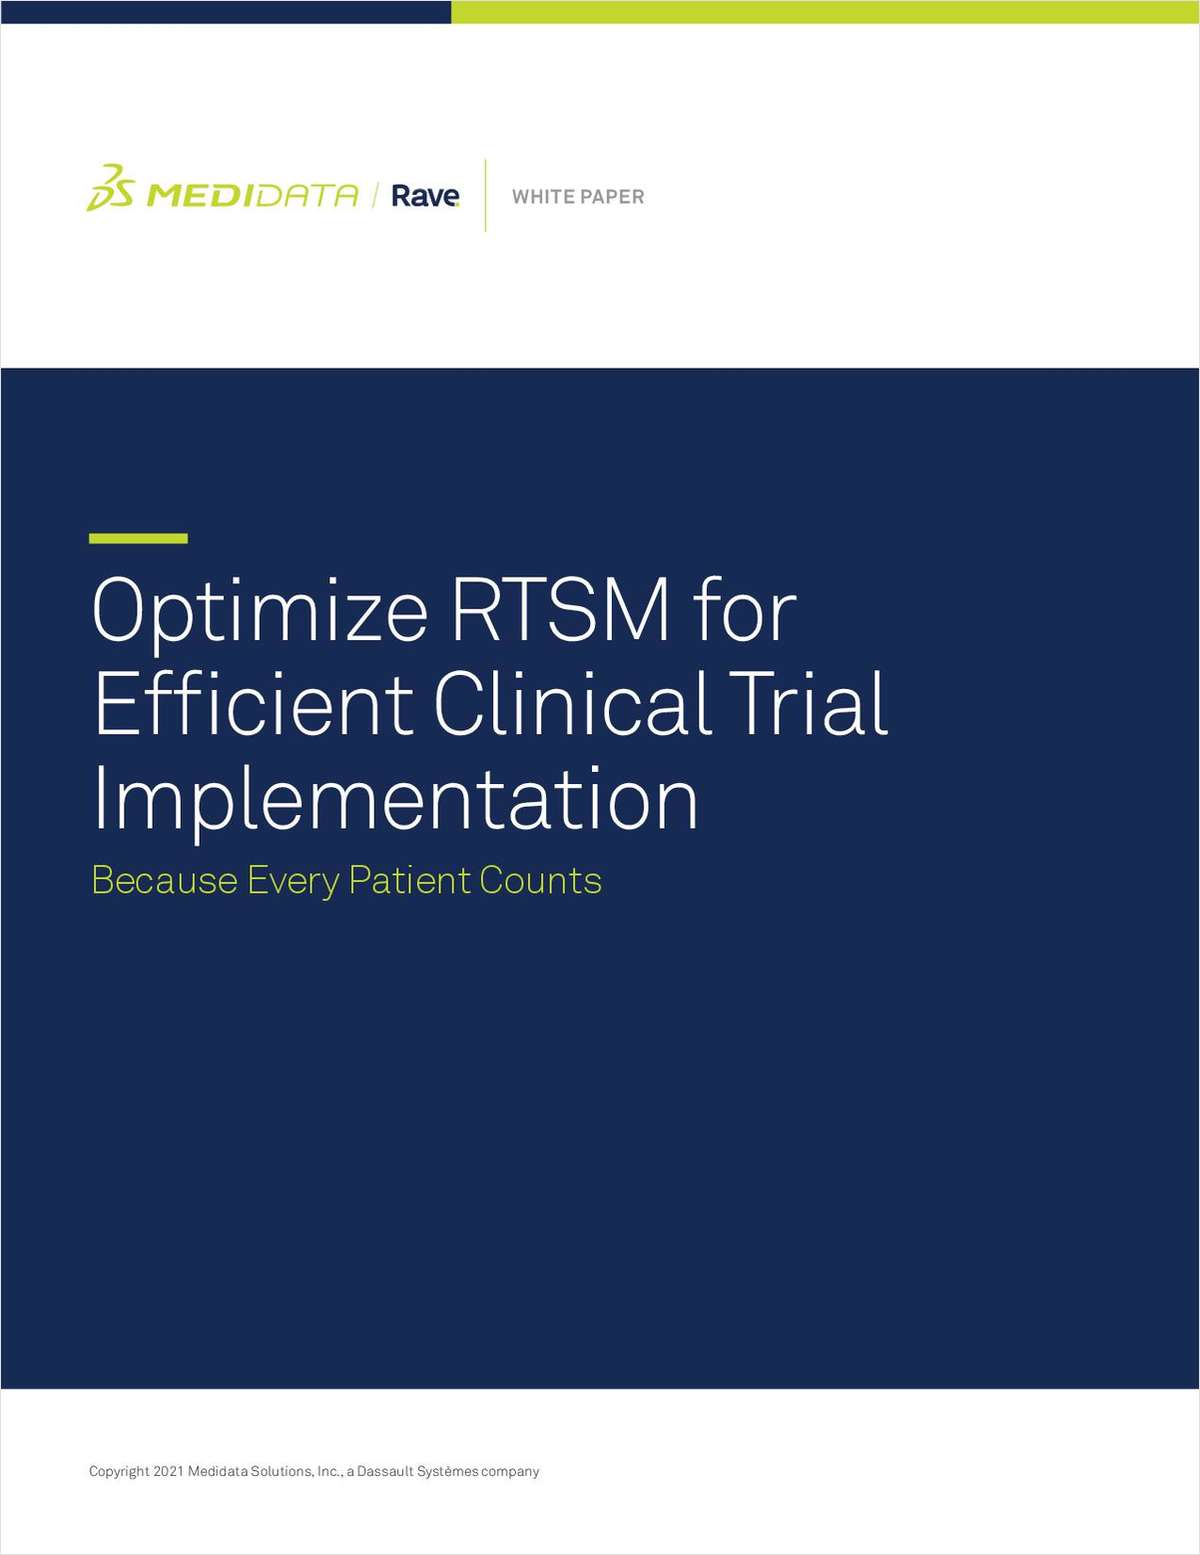 Optimize RTSM for Efficient Clinical Trial Implementation